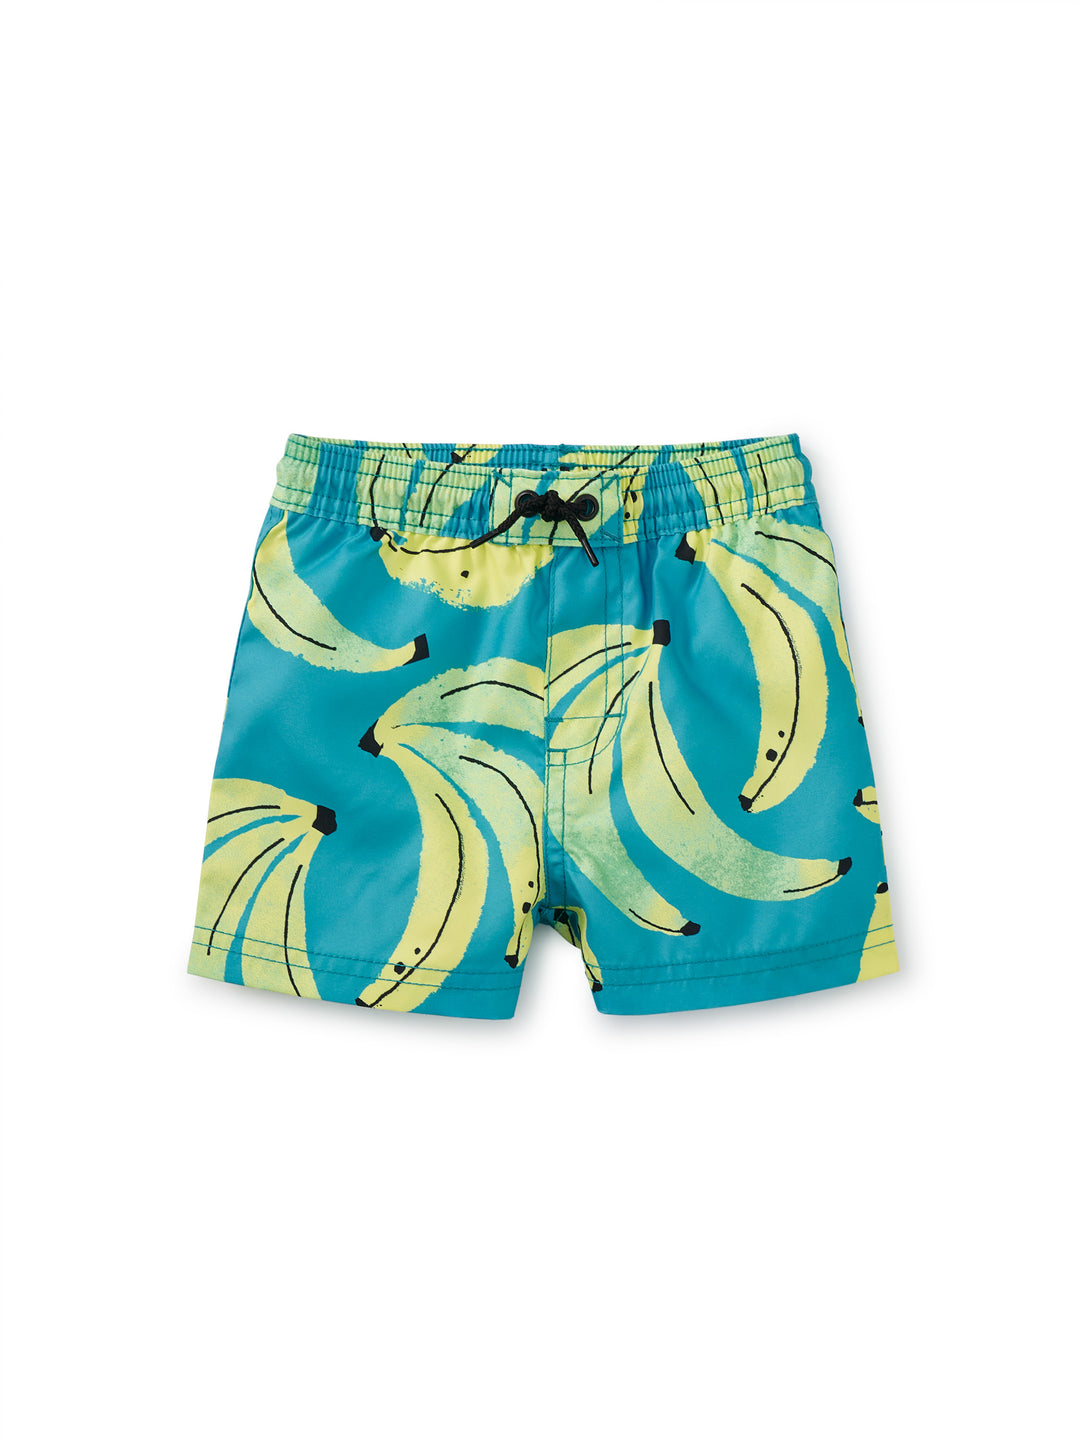 Tea Collection Shortie Swim Trunks, Bananafana |Mockingbird Baby & Kids